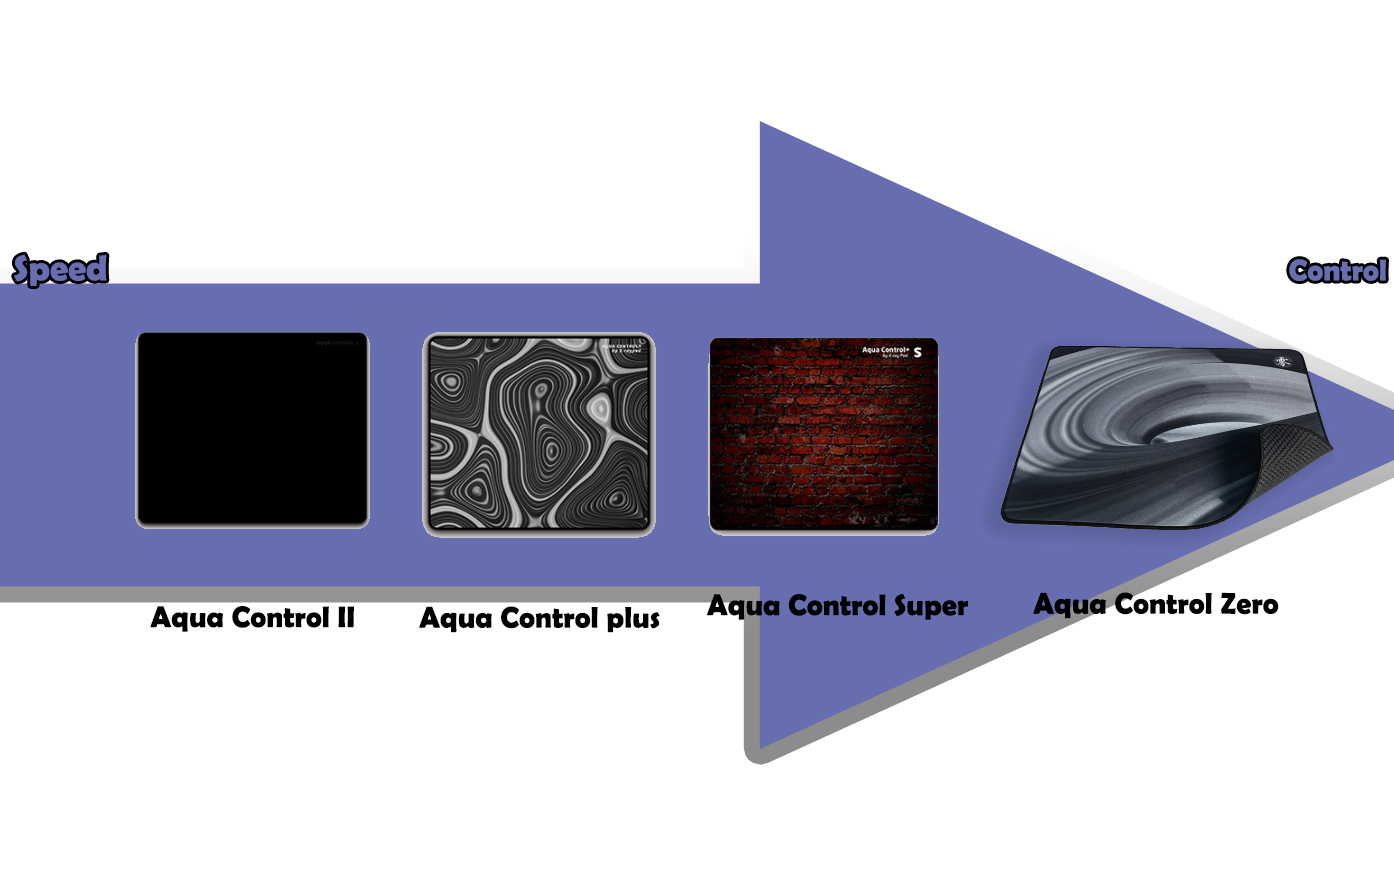 X-raypad Aqua Control Zero (零) Gaming Mouse Pads – Slow & Control 